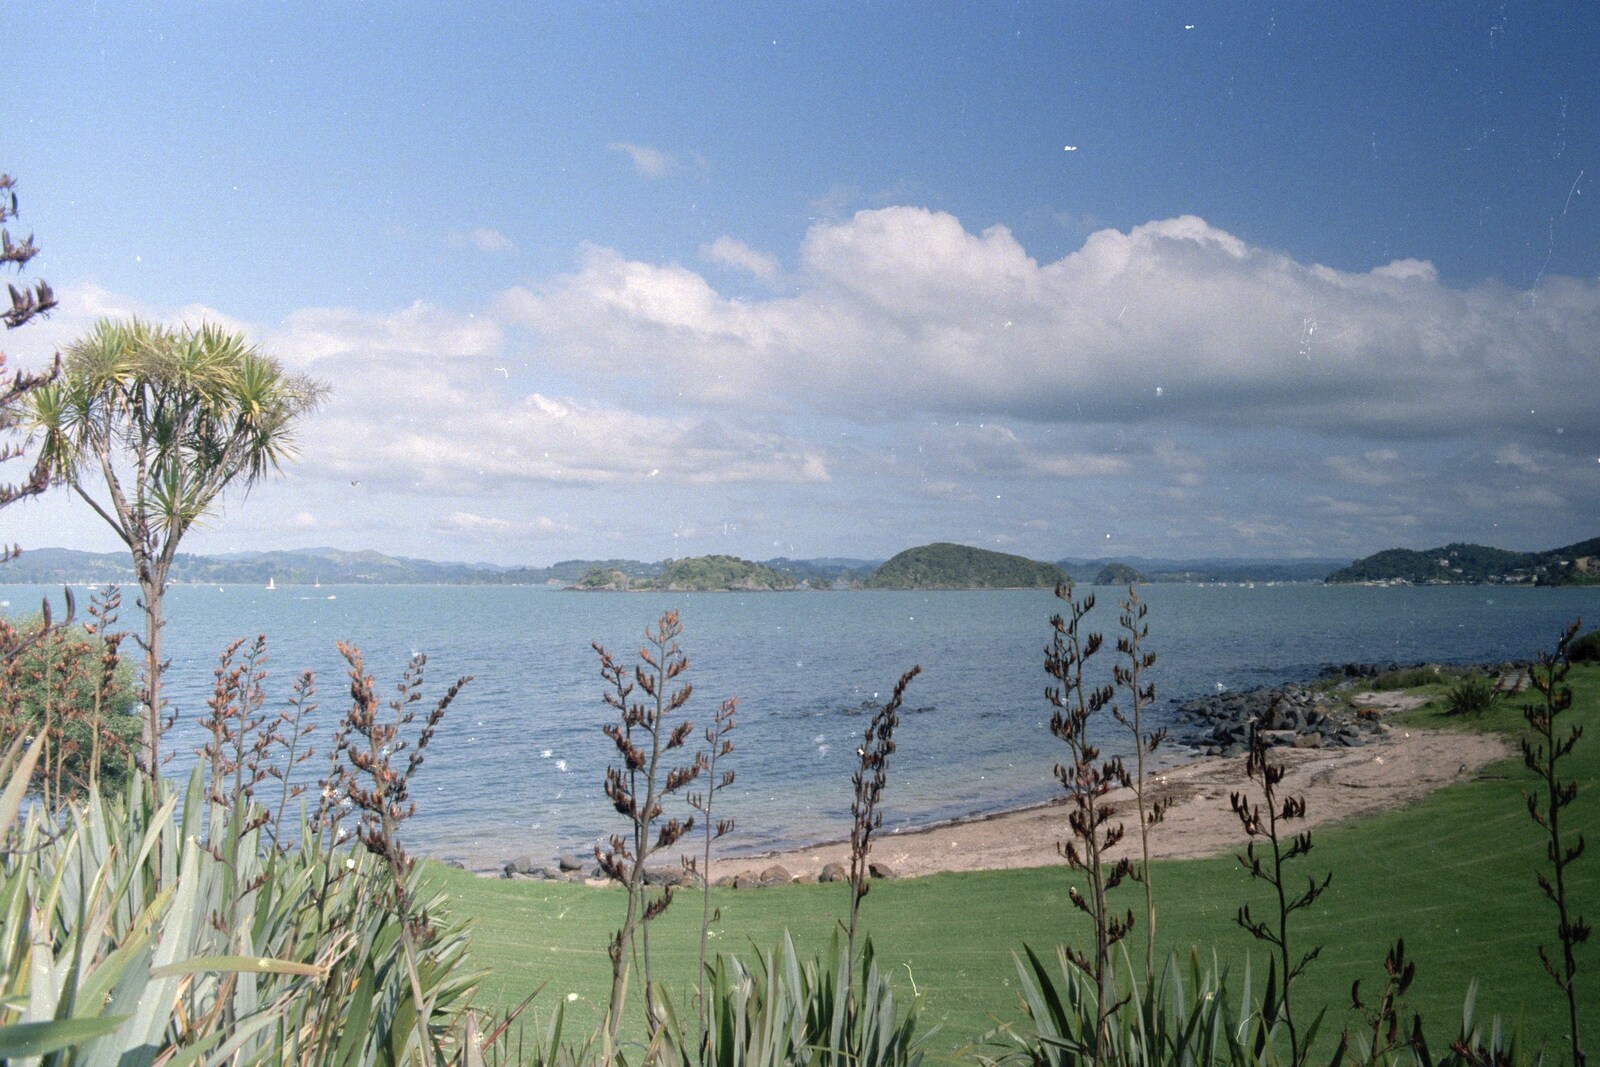 A lake in Waitangi from A Road-trip Through Rotorua to Palmerston, North Island, New Zealand - 27th November 1992